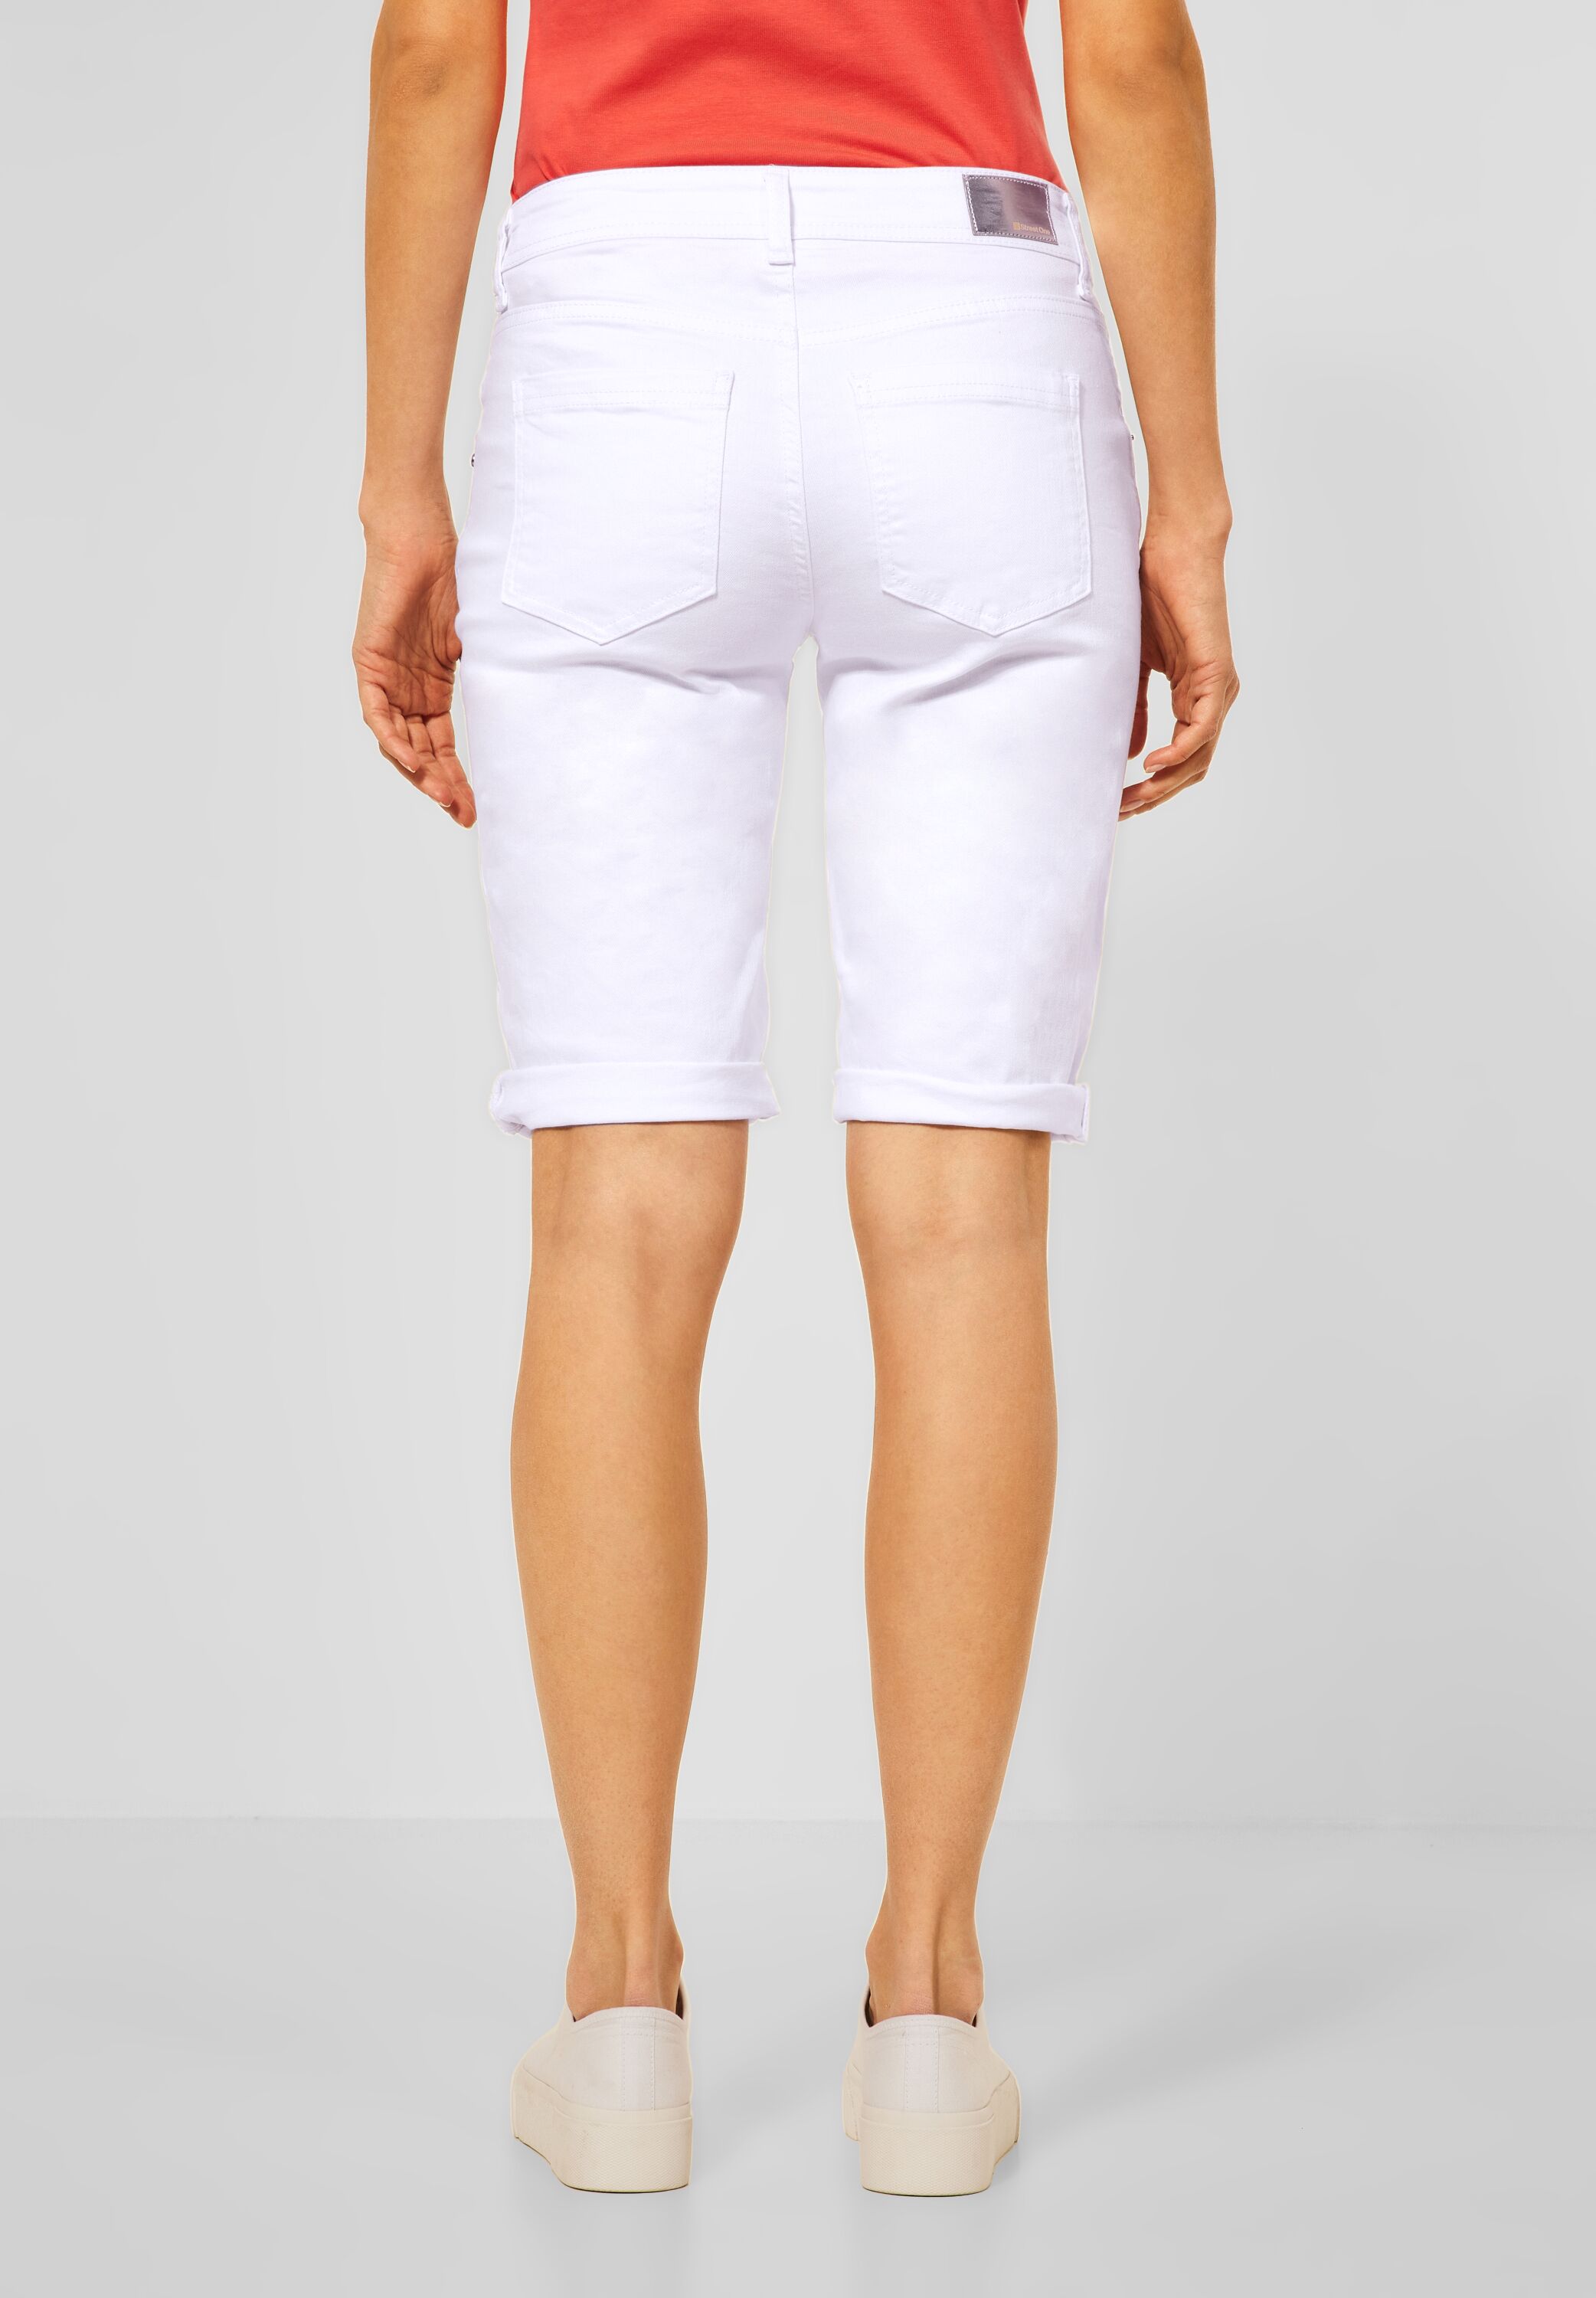 Street One Jeans Bermuda Style Jane Bermuda in White im SALE reduziert  A374996-10000 - CONCEPT Mode